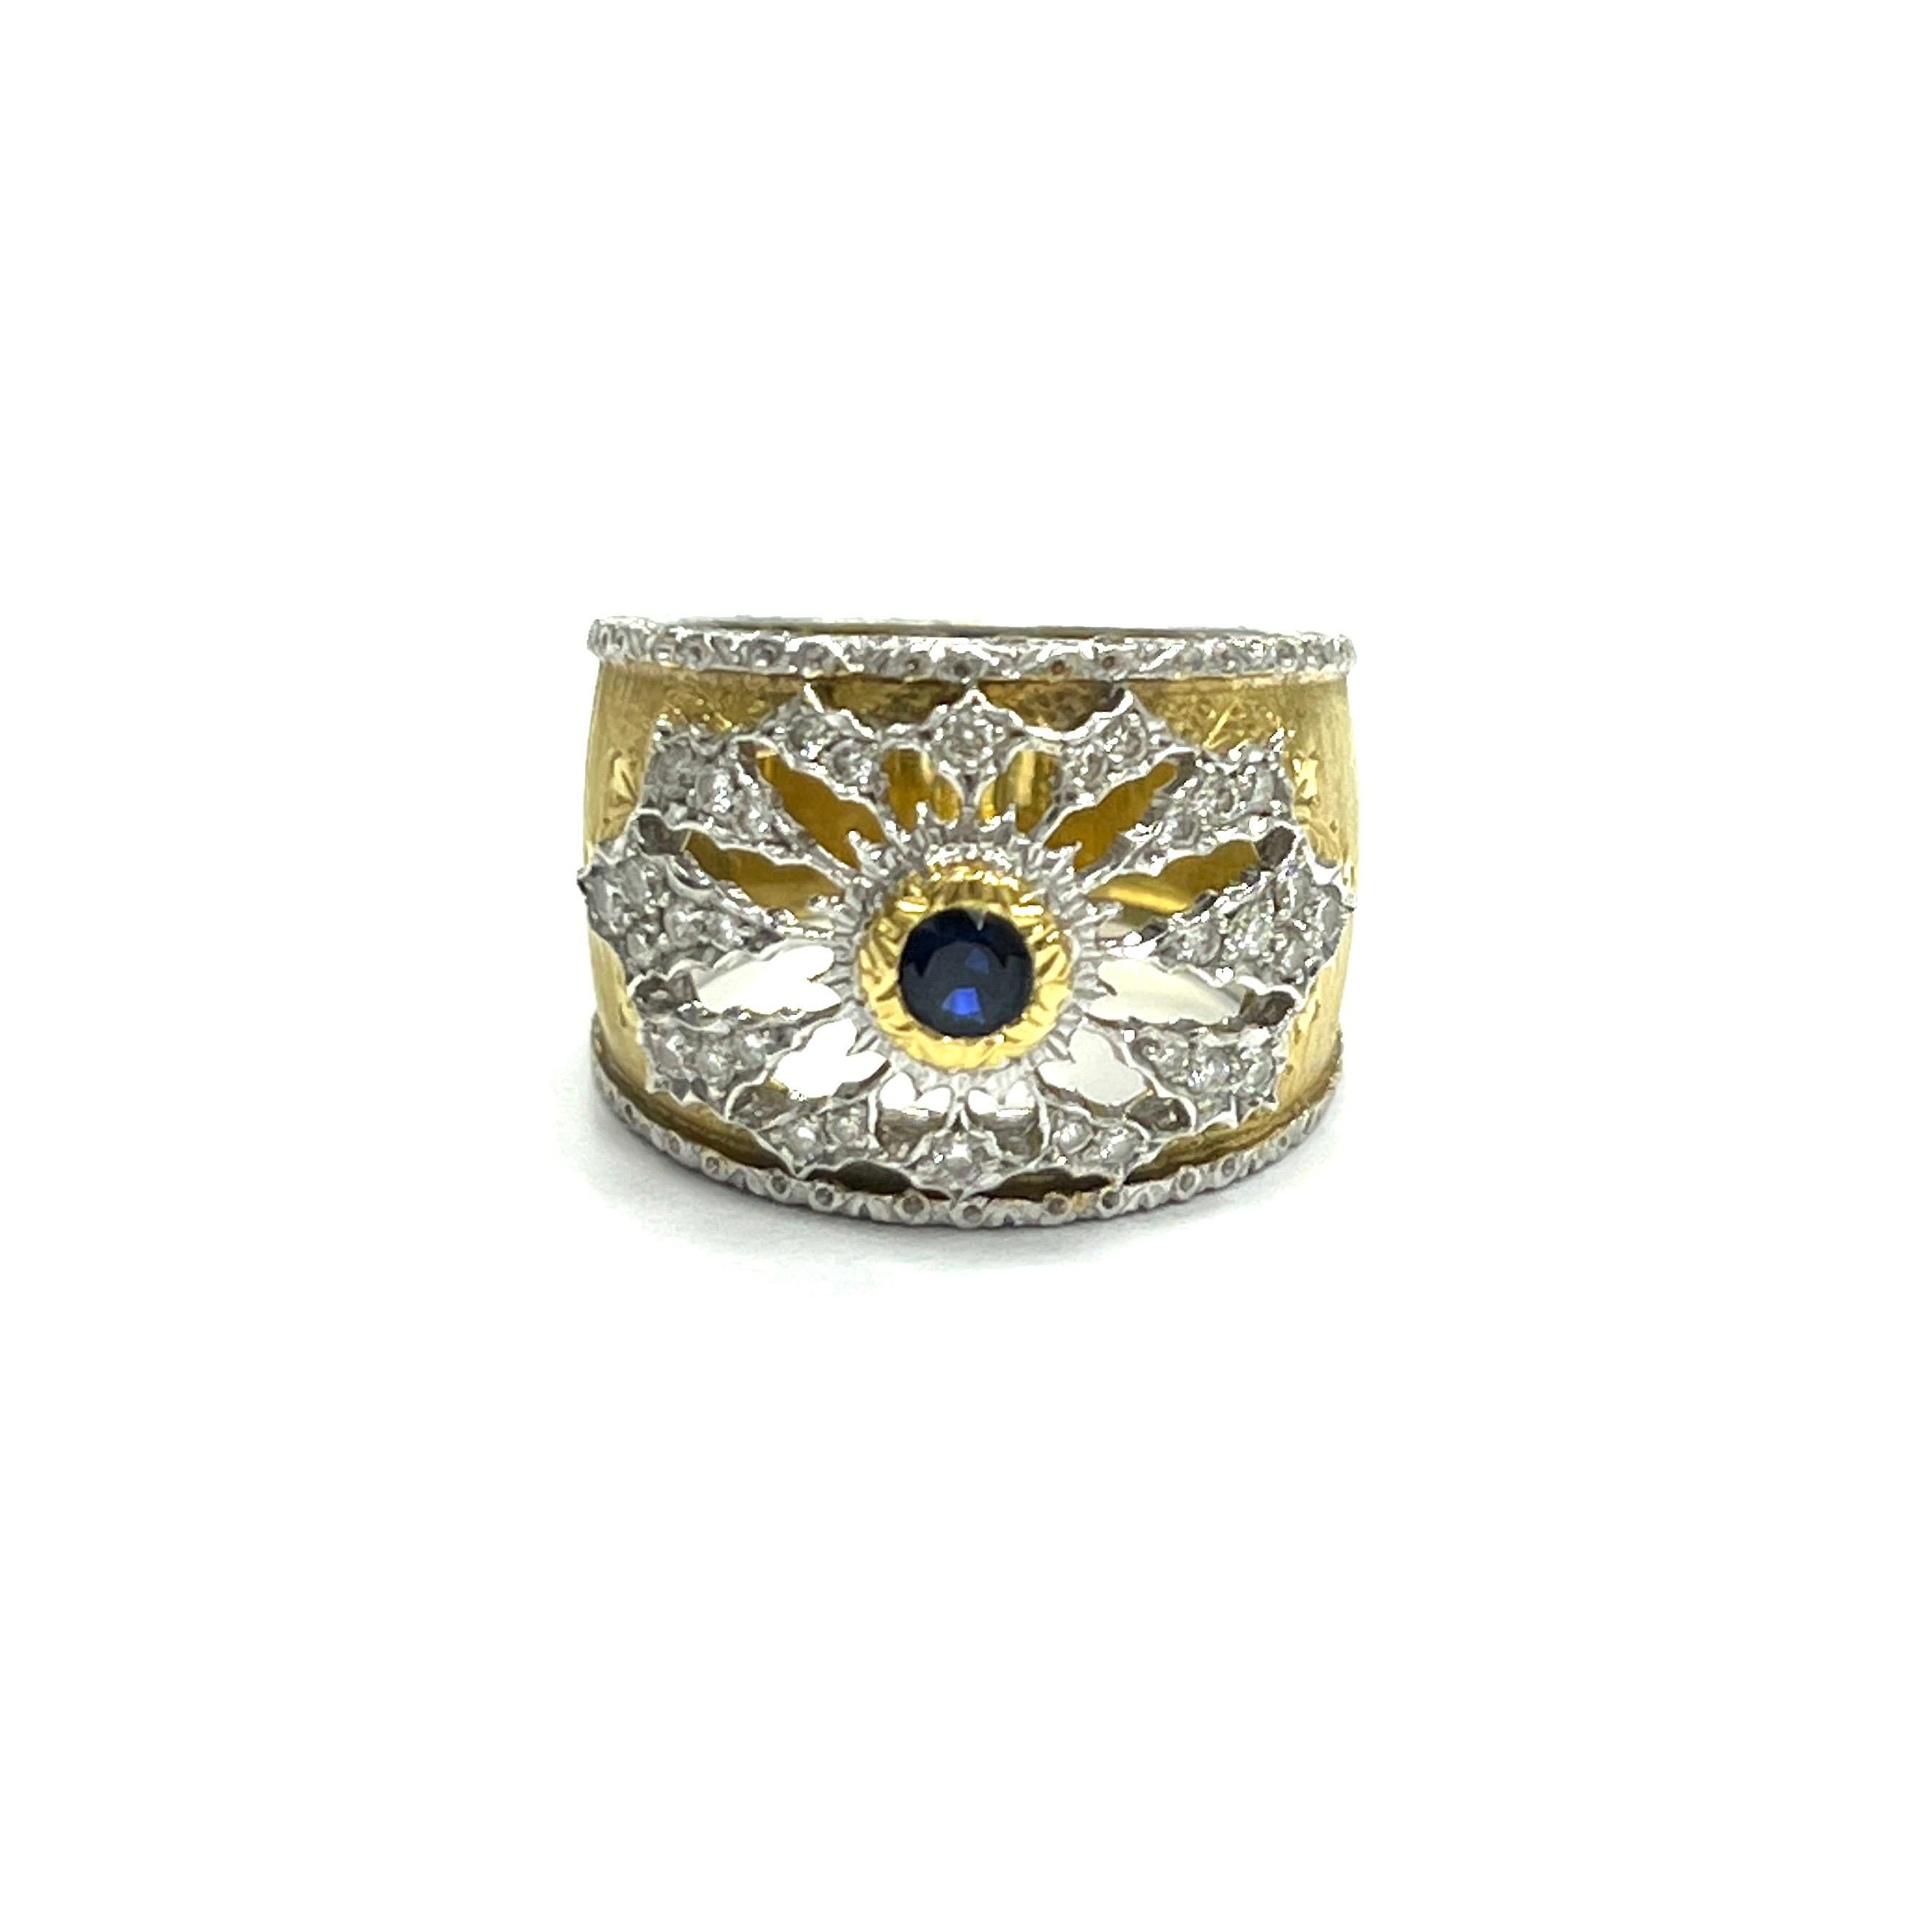 Buccellati sapphire diamond gold ring

Bezel-set round sapphire, round-cut diamonds, 18 karat yellow and white gold; marked M. Buccellati, 750

Size: 6 US; top width 1.5 cm
Total weight: 9.7 grams